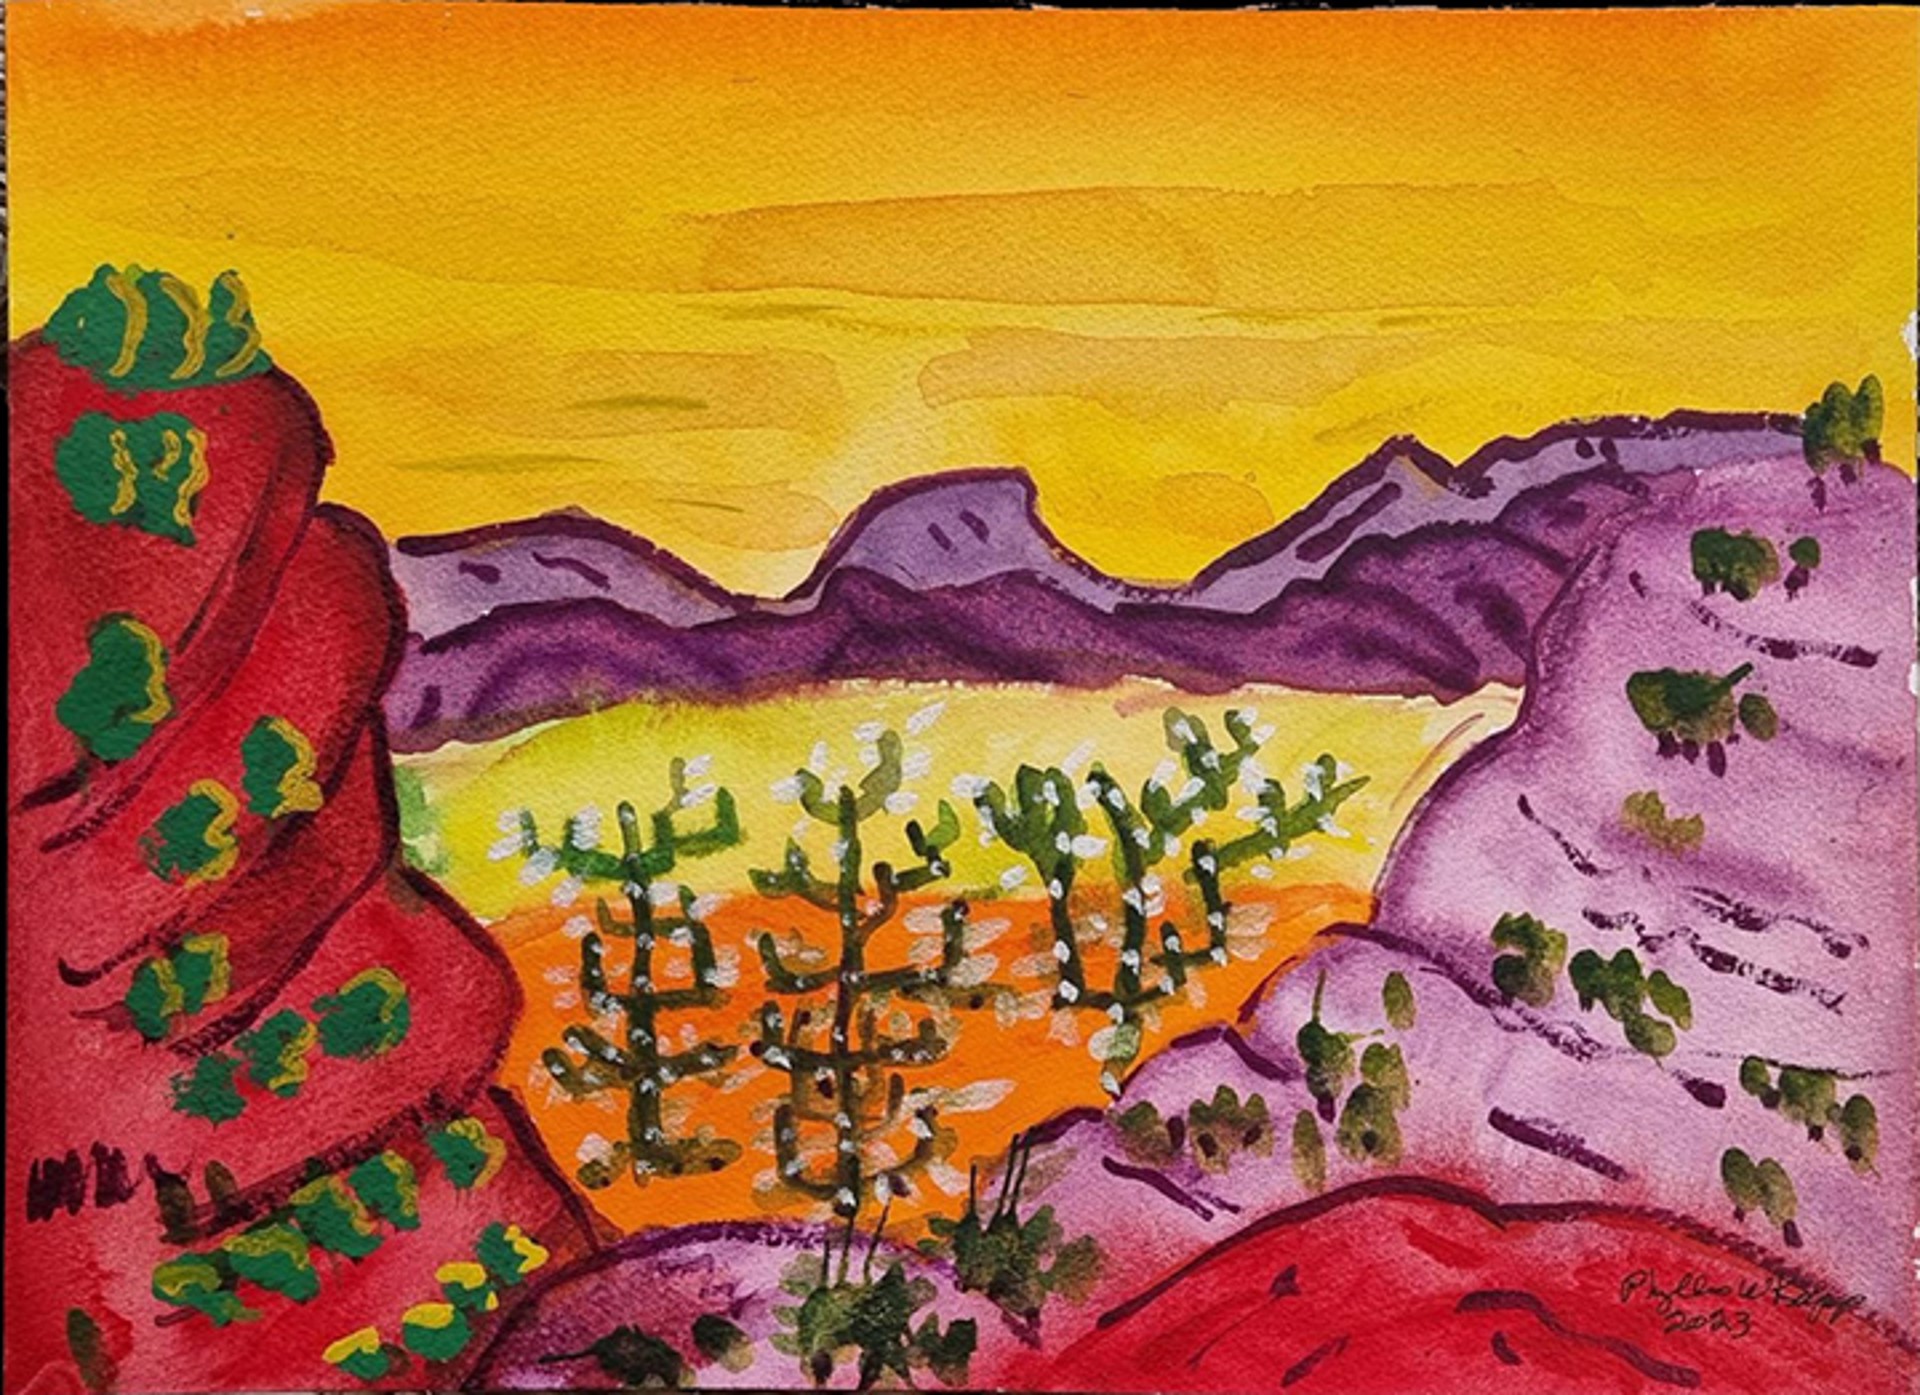 Romance of the Desert by Phyllis Kapp